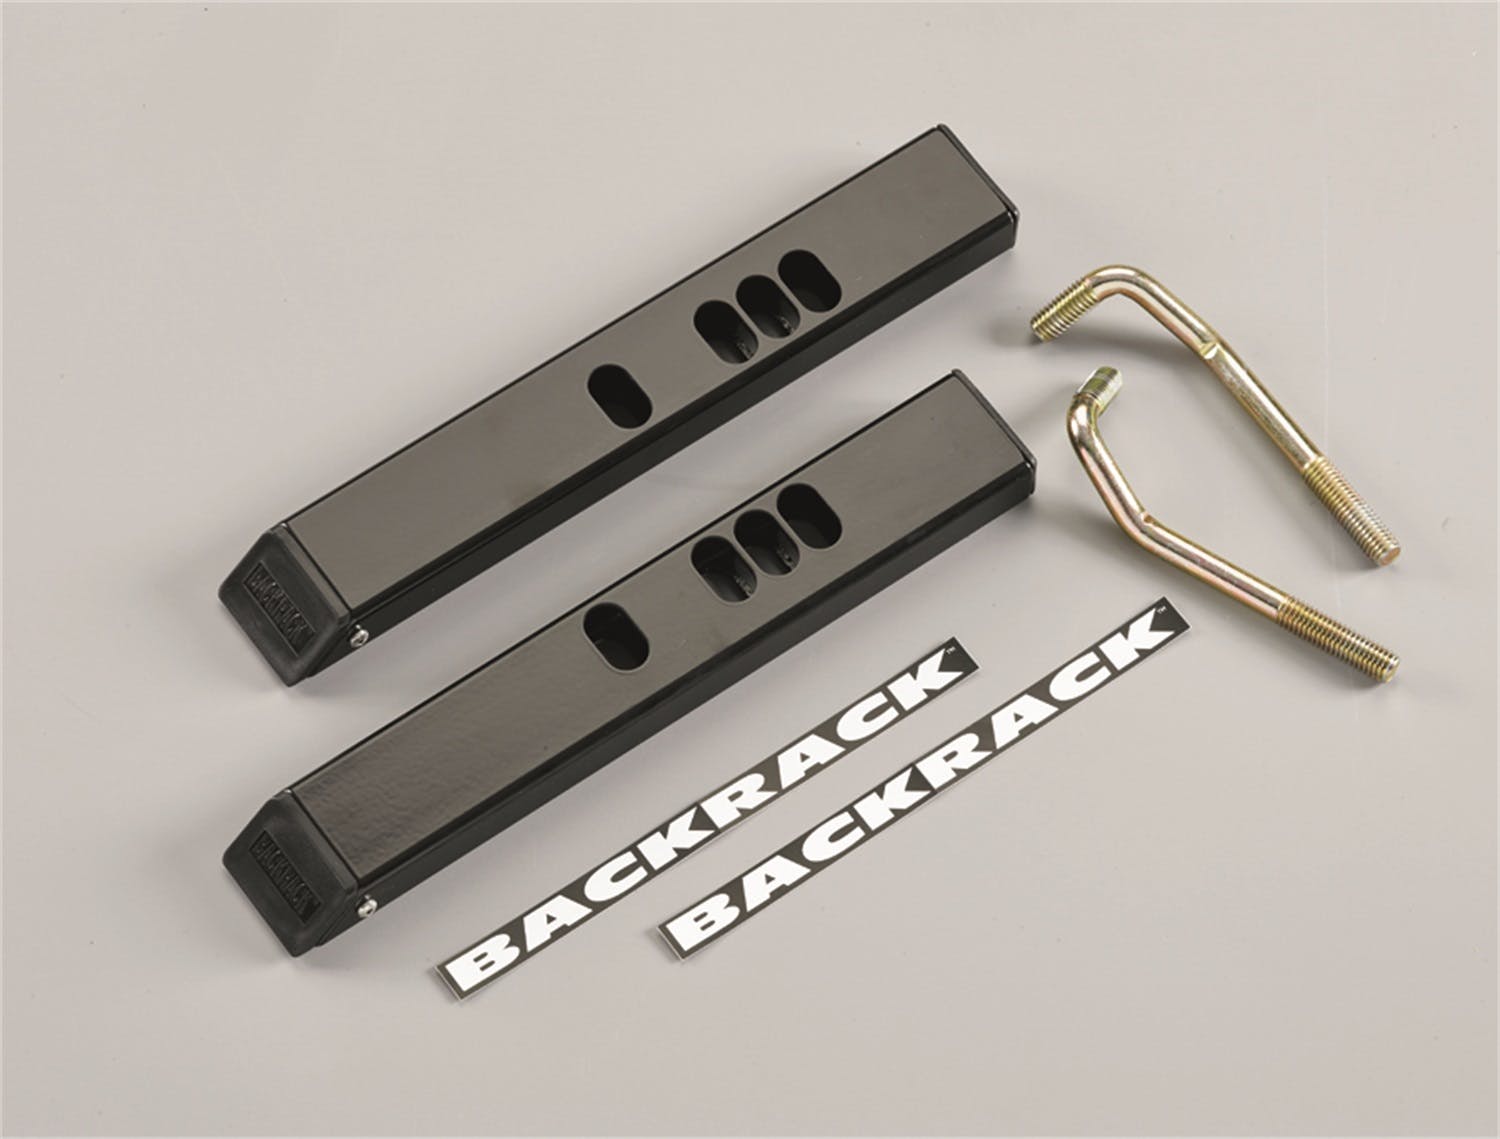 BACKRACK 92521 Tonneau Cover Adaptors -Low Profile 1 riser